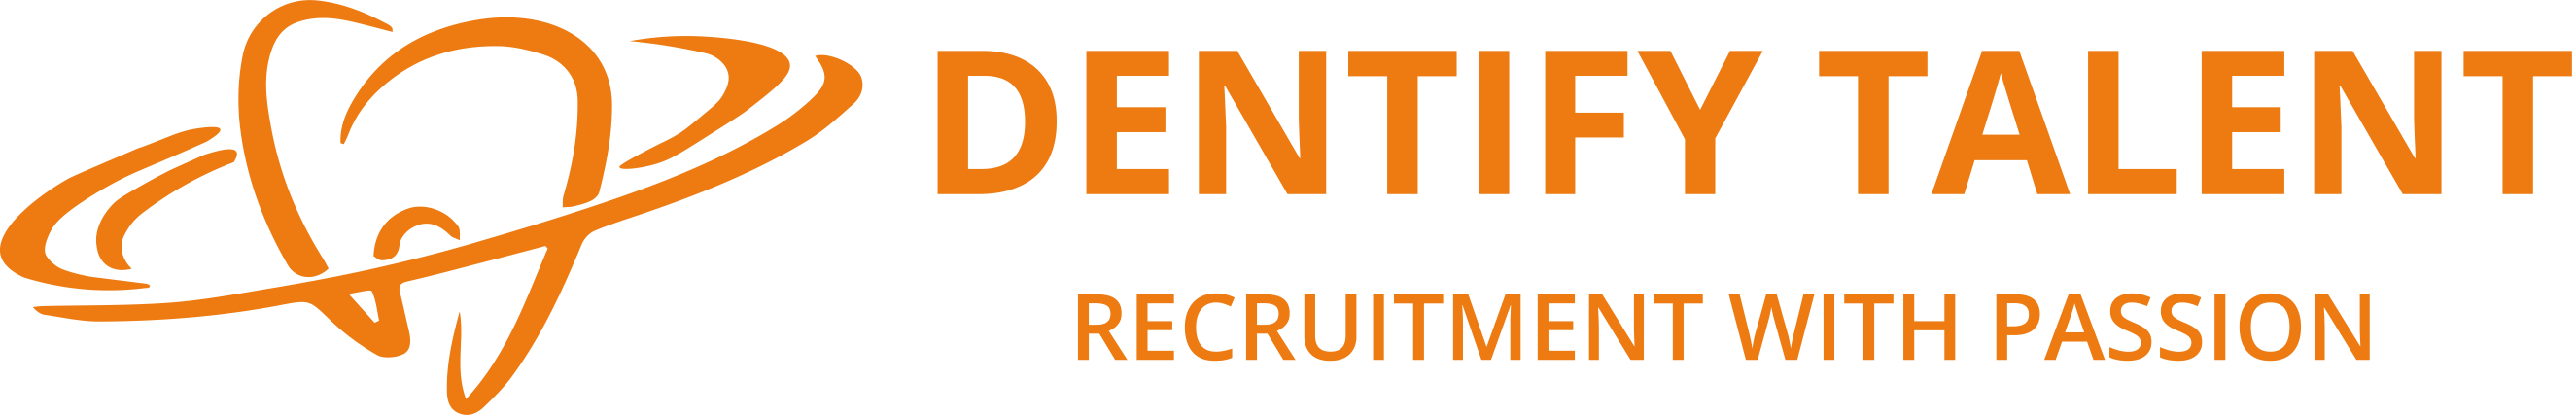 dentify-talent logo